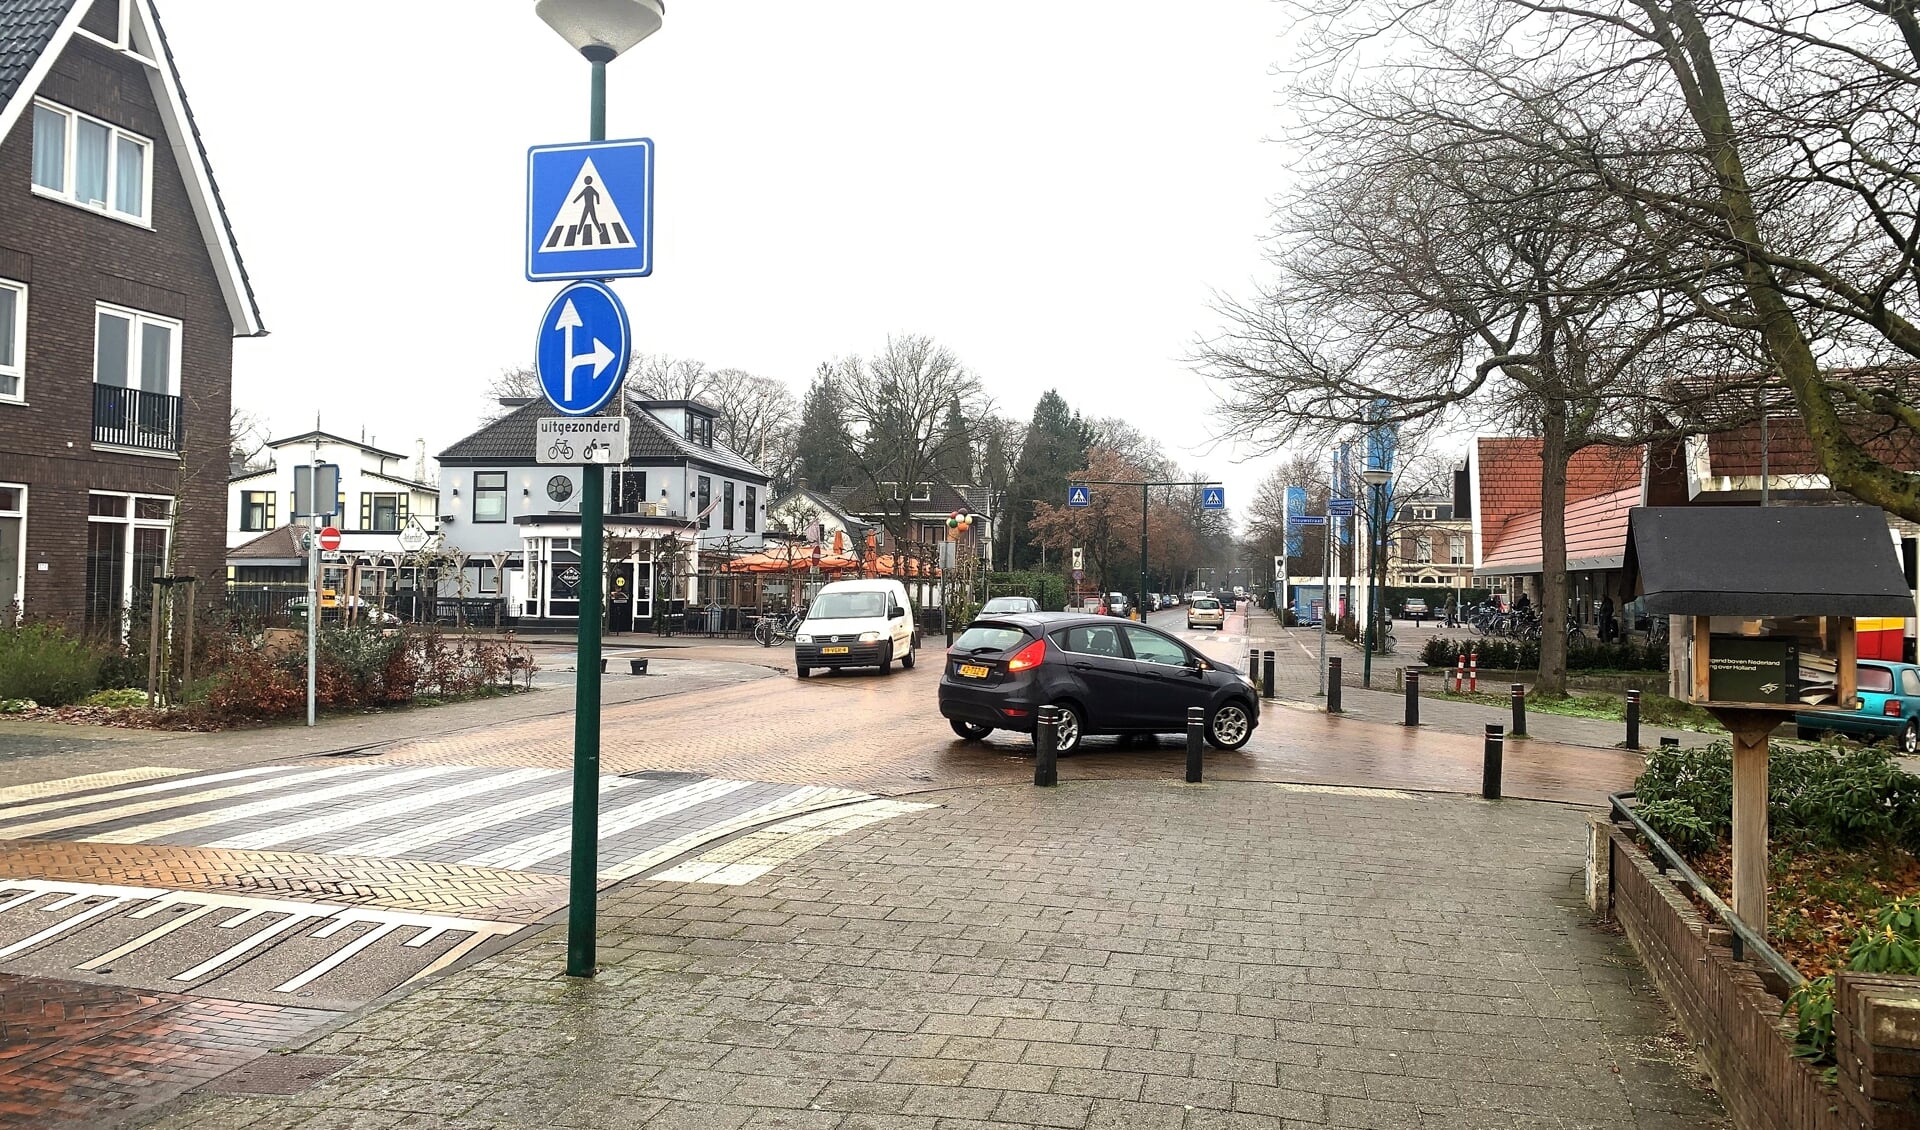 Rond de kruising Eemnesserweg, Nieuwstraat, Dalweg komen medio 2022 vier attentielichten.